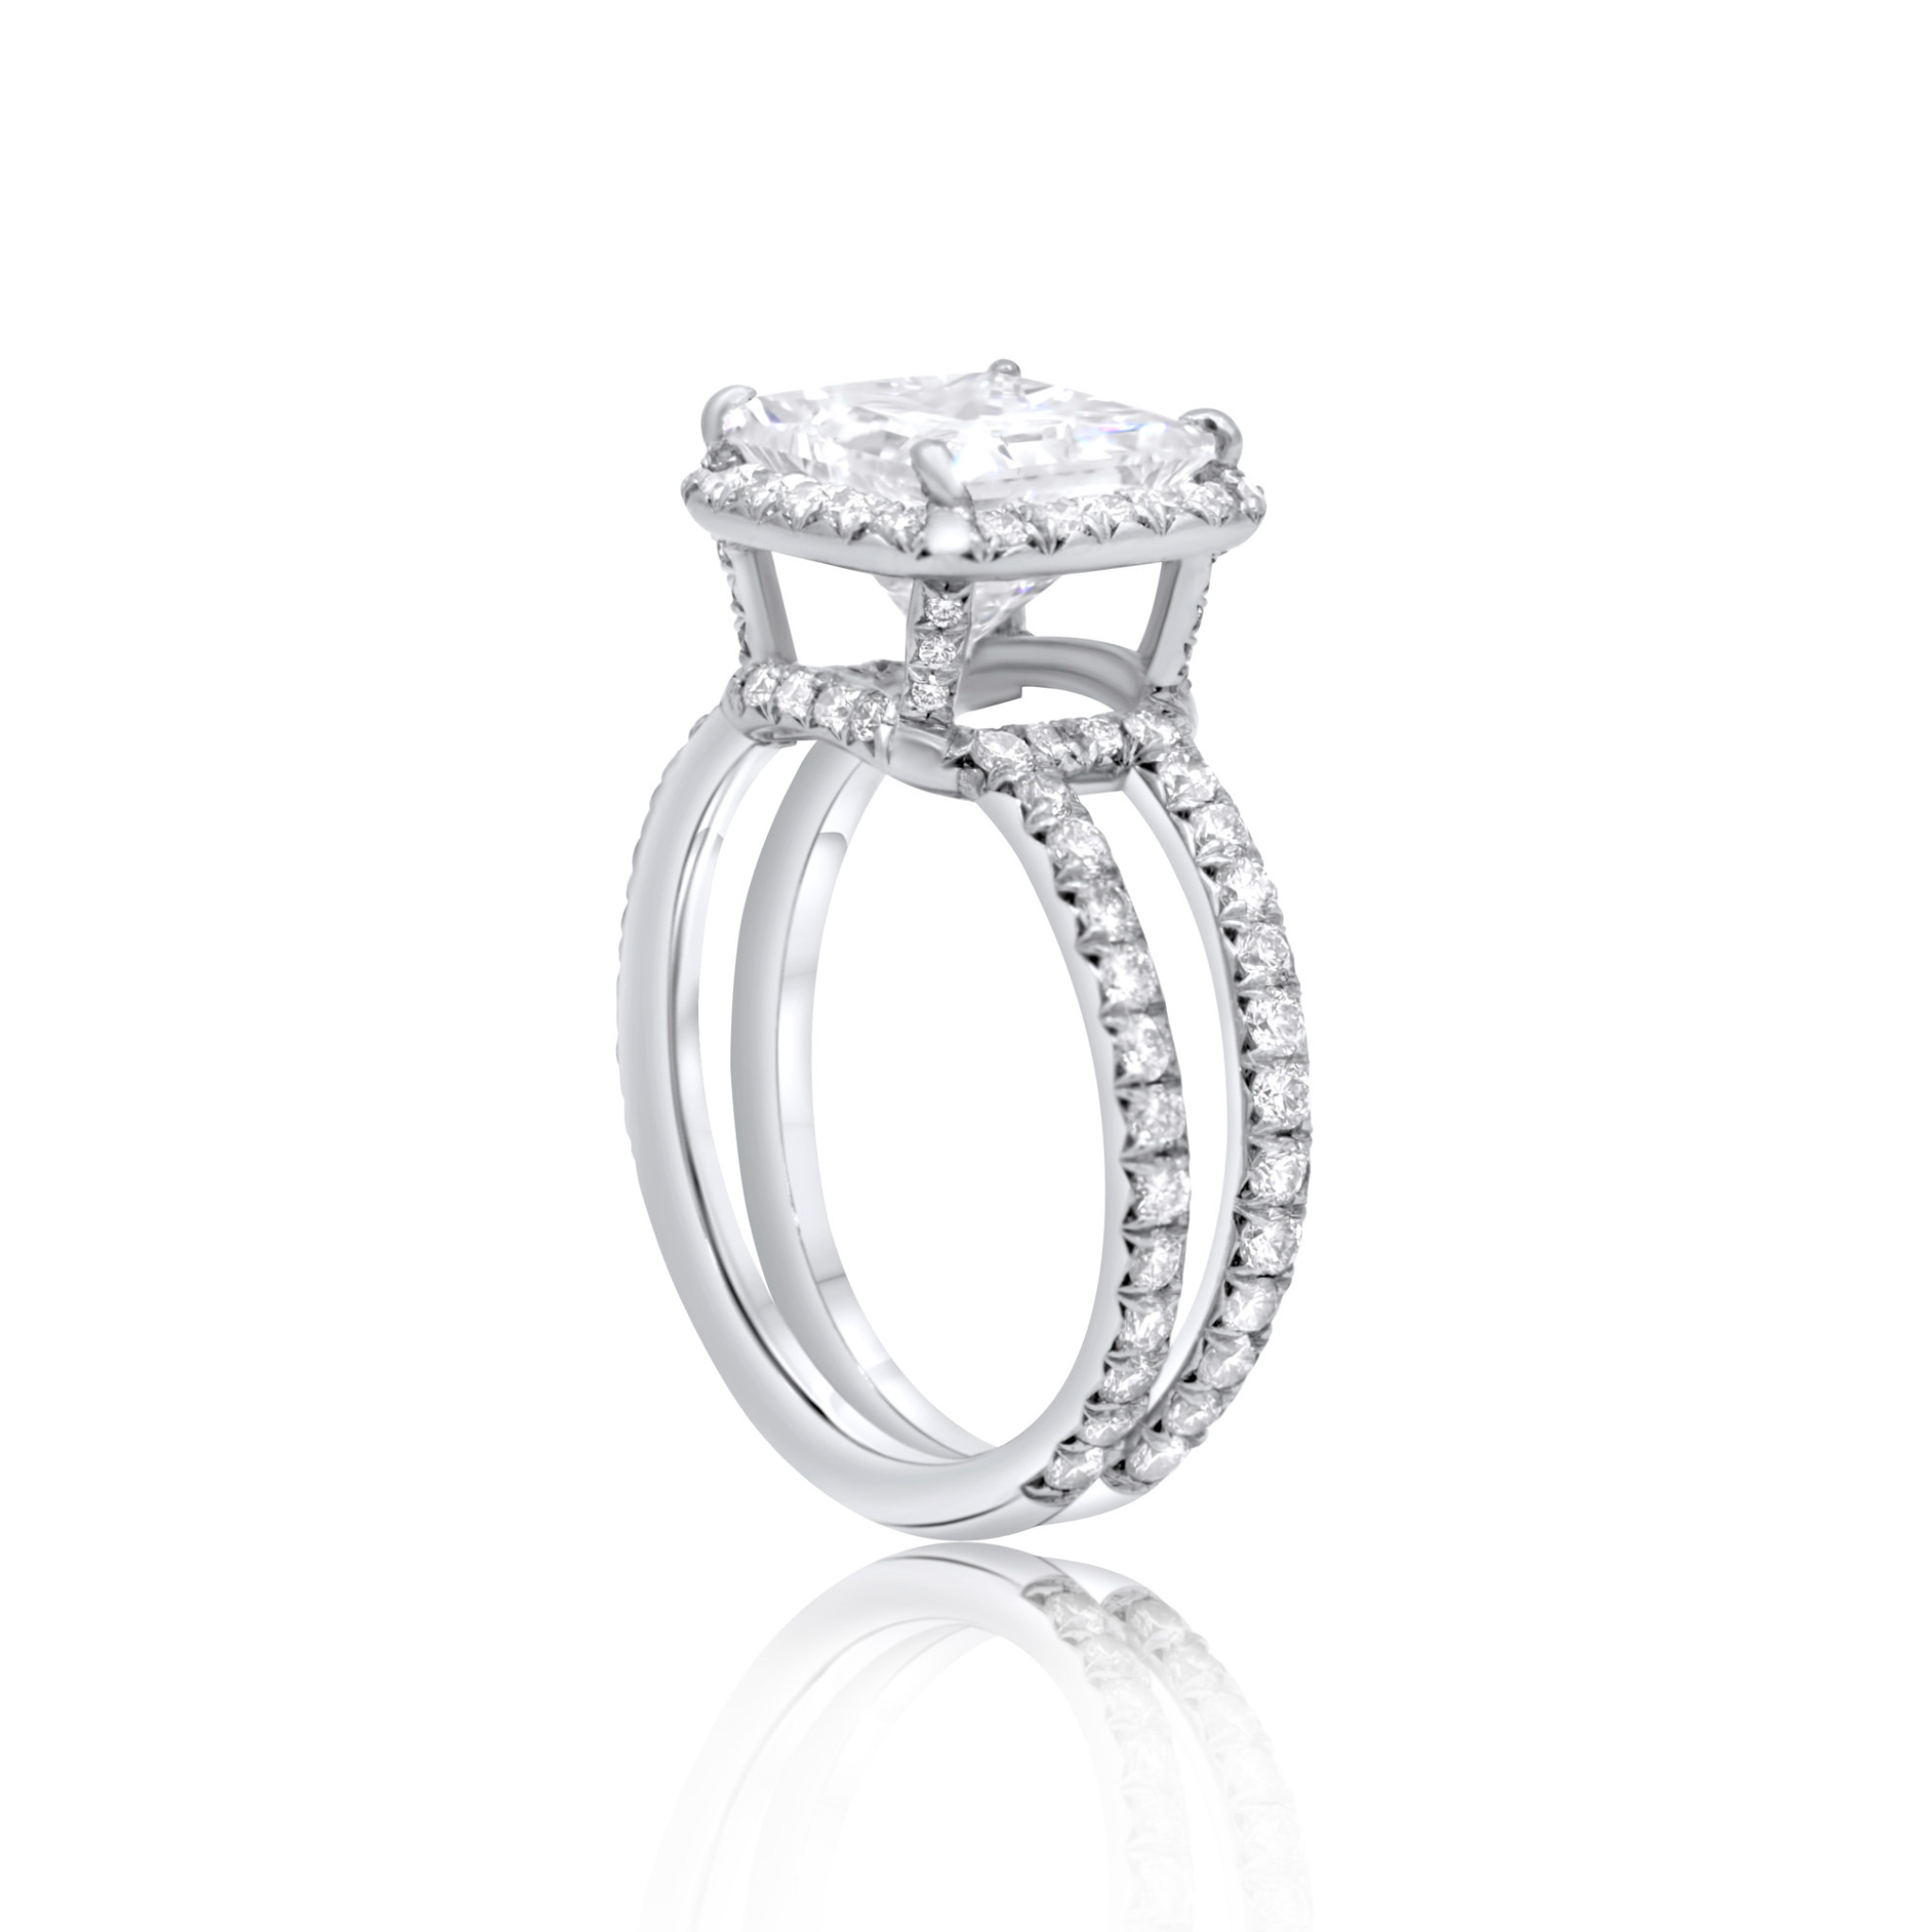 3ct Princess Cut Diamond Ring.jpg